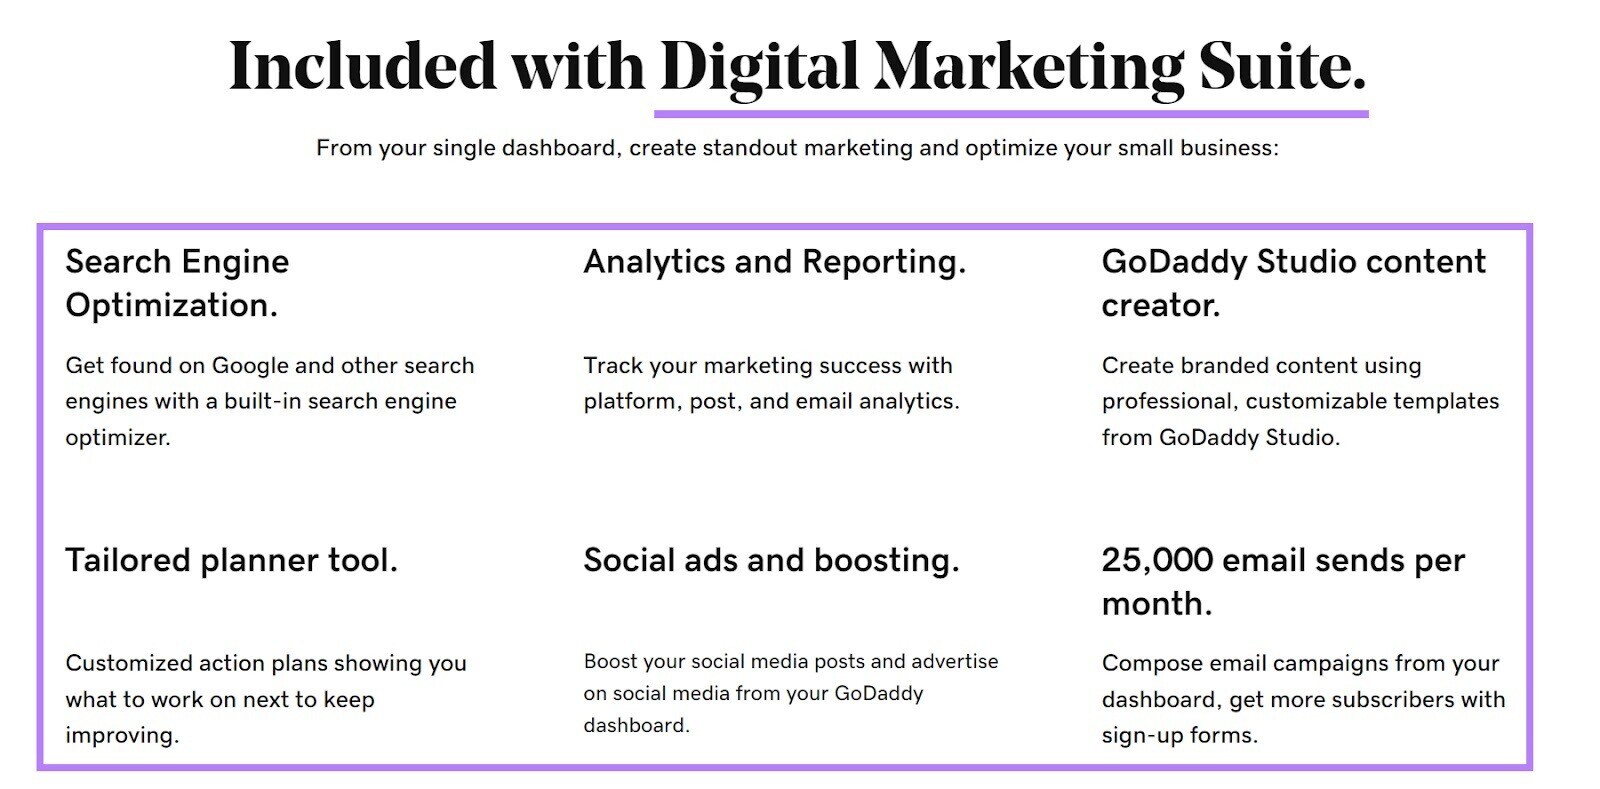 GoDaddy's Digital Marketing Suite